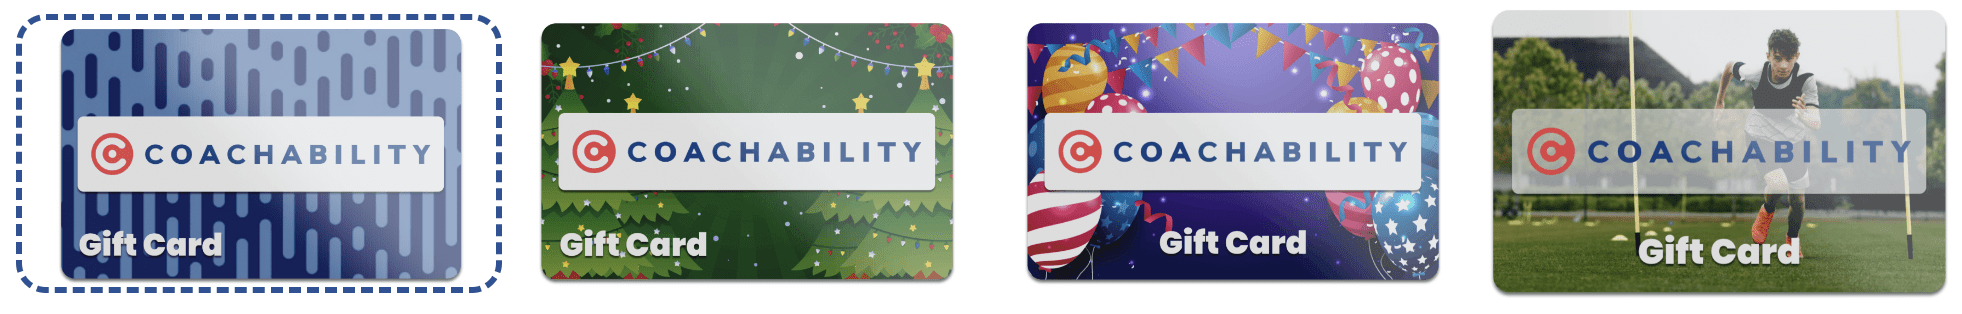 Buy a Coachability Gift Card